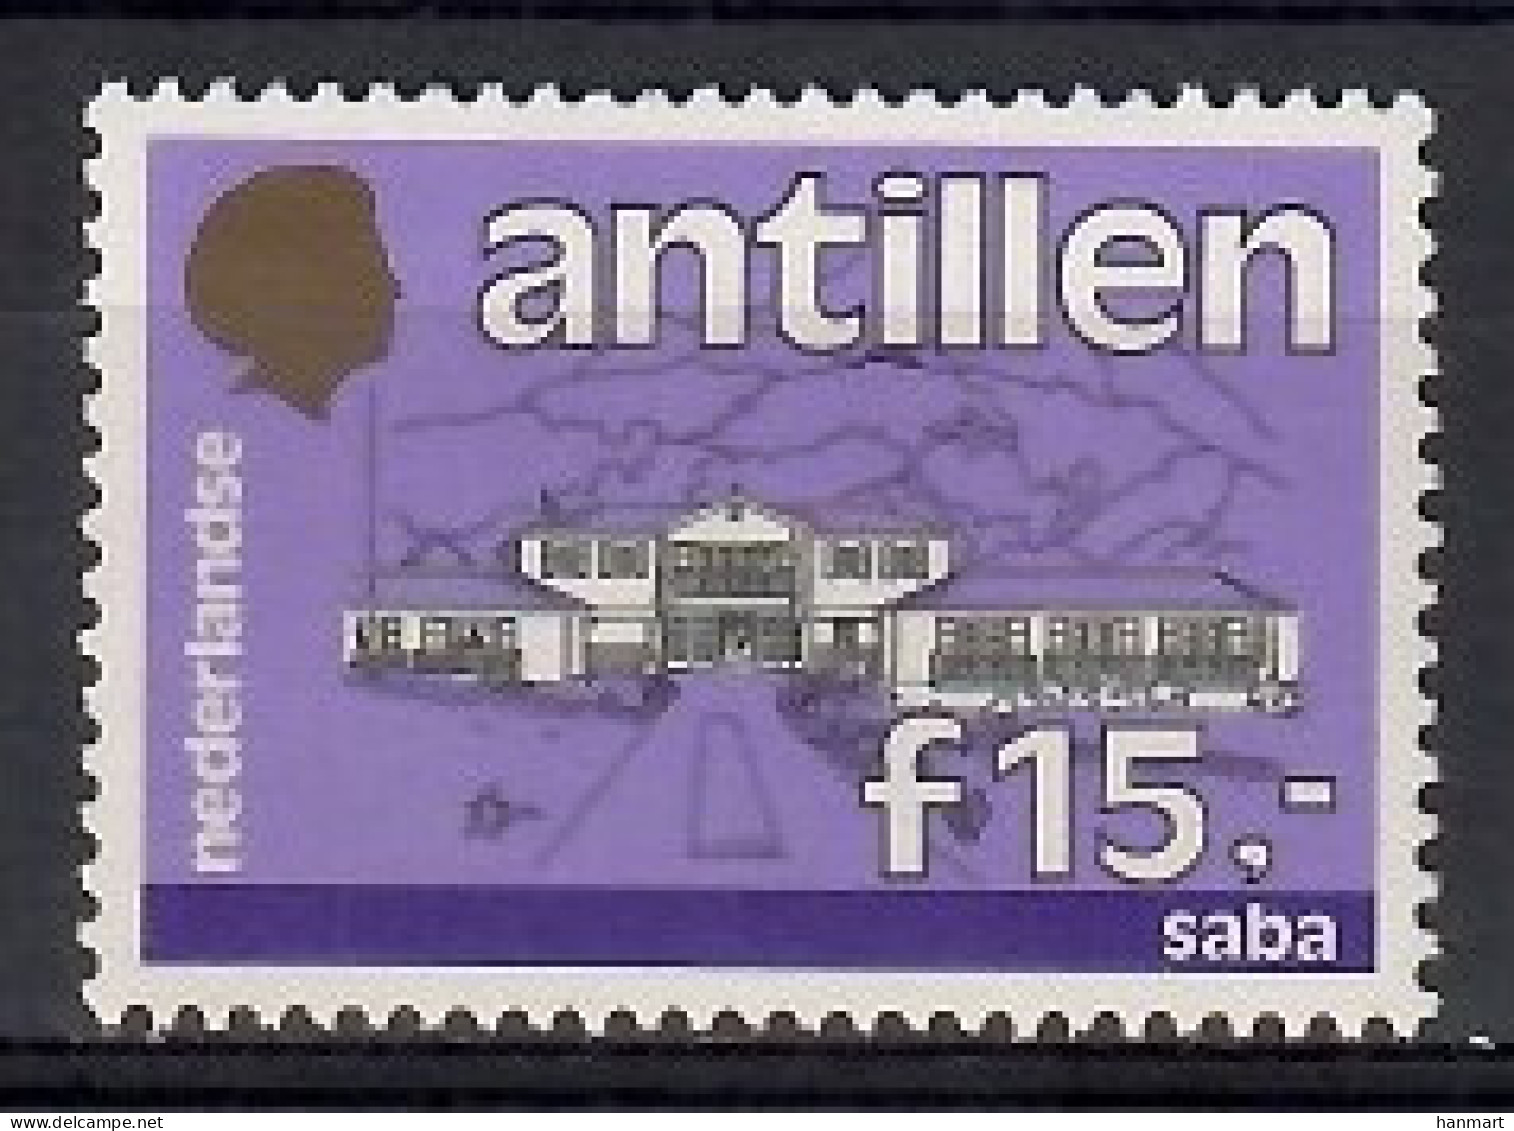 Netherlands Antilles 1989 Mi 655 MNH  (ZS2 DTA655) - Sonstige